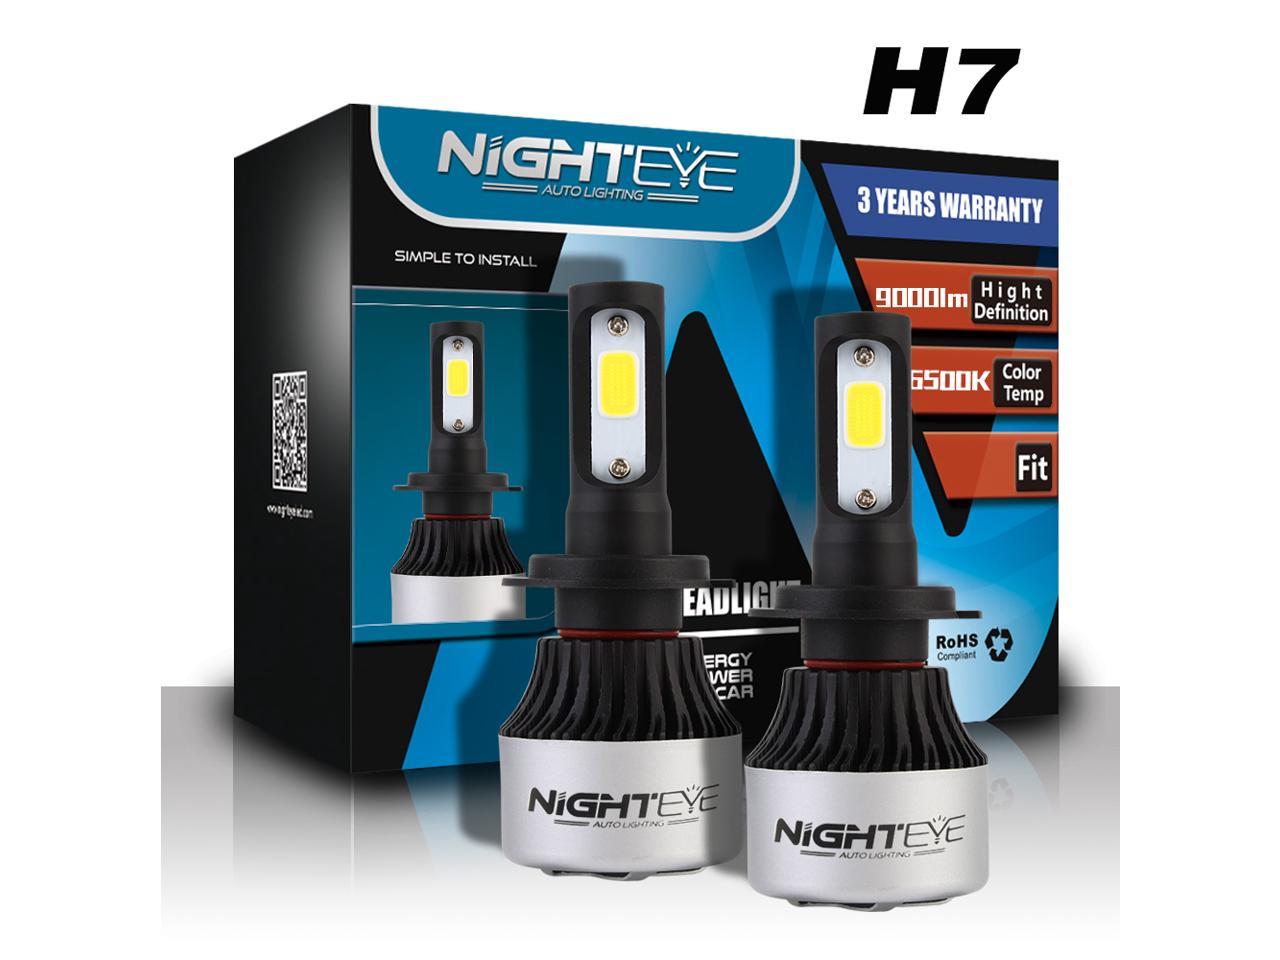 NIGHTEYE H7 LED Headlight Bulbs, 9000 Lumens 1:1 Size Design Headlights Conversion Kits, Xenon White 72W Hi/Lo Beam, Fast Installation Halogen Replacement